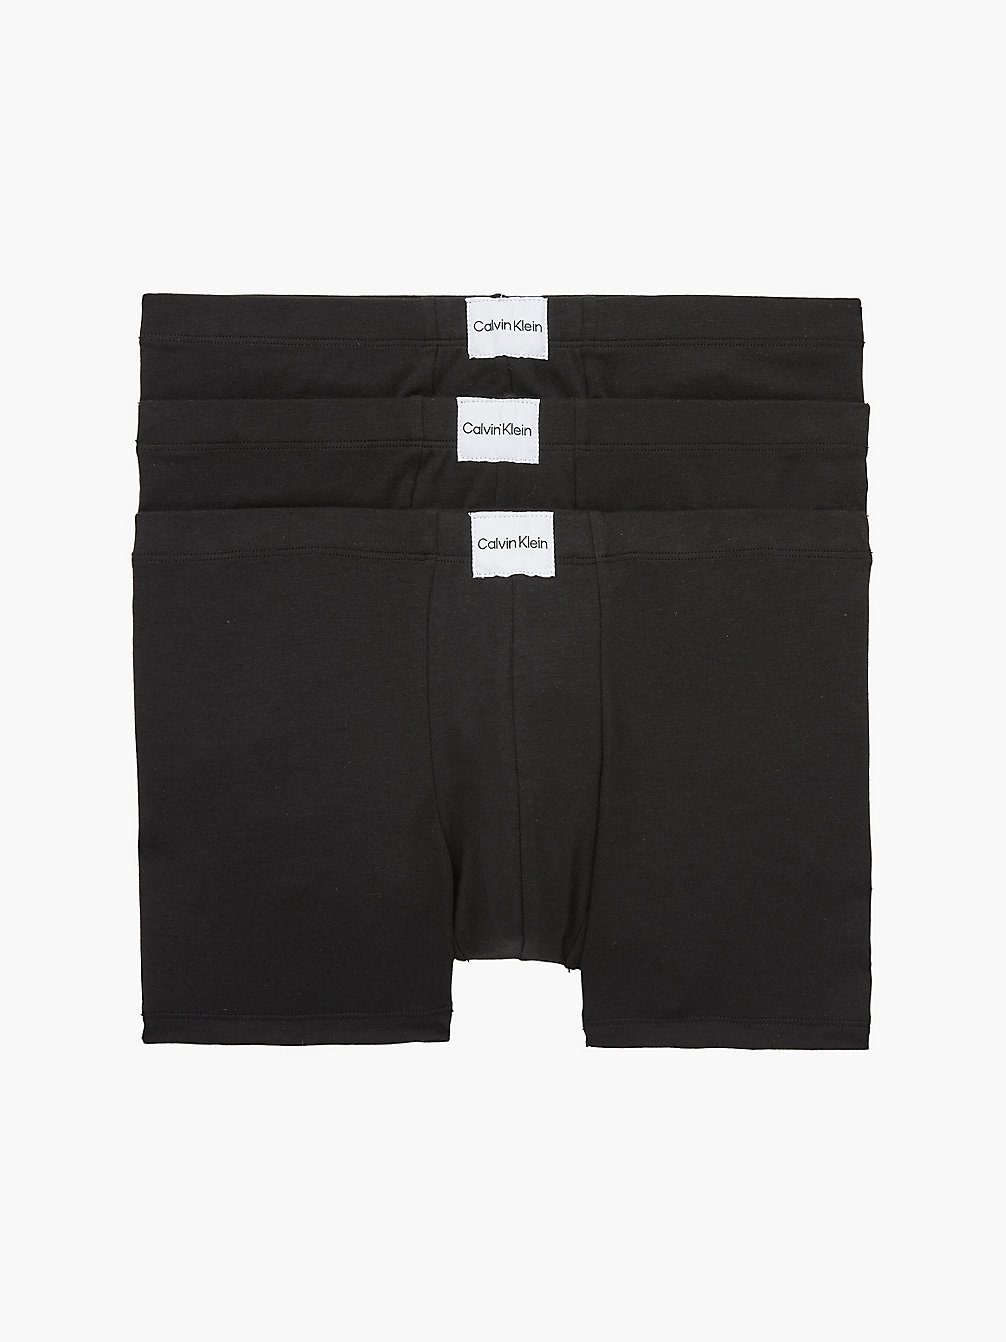 BLACK/BLACK/BLACK 3 Pack Trunks - Pure Cotton undefined men Calvin Klein